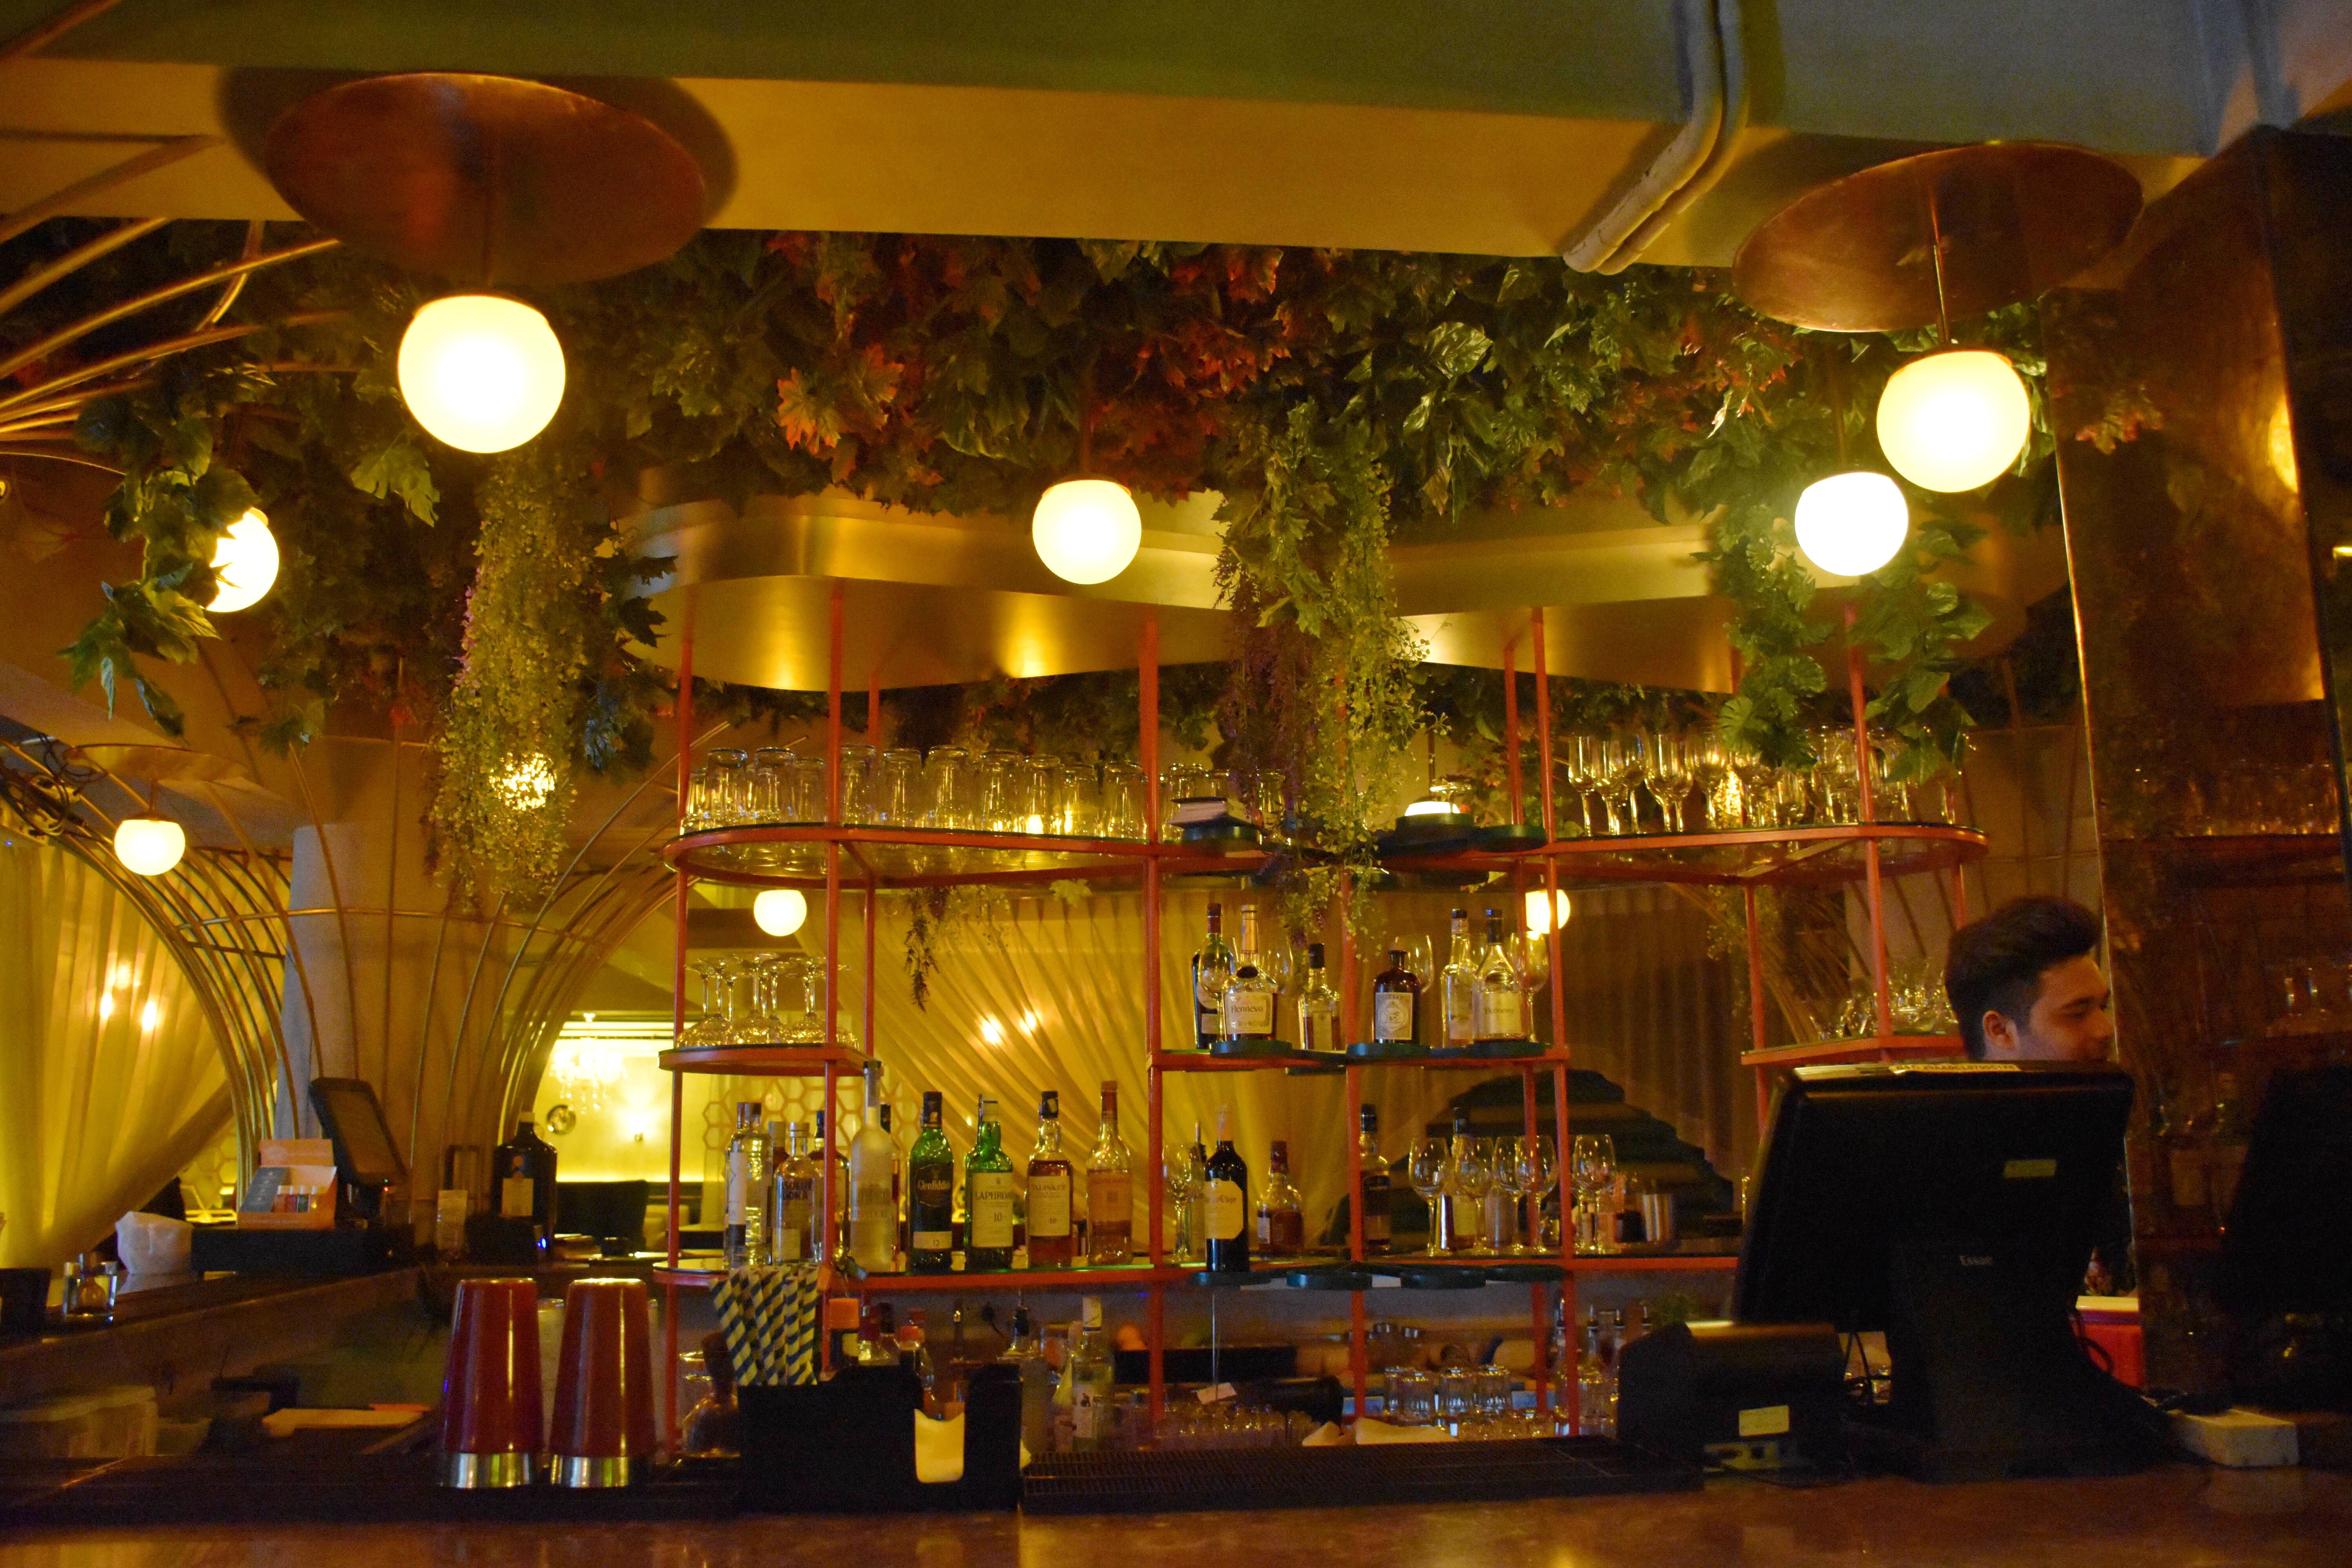 Bar,Lighting,Restaurant,Building,Night,Coffeehouse,Pub,Tavern,Interior design